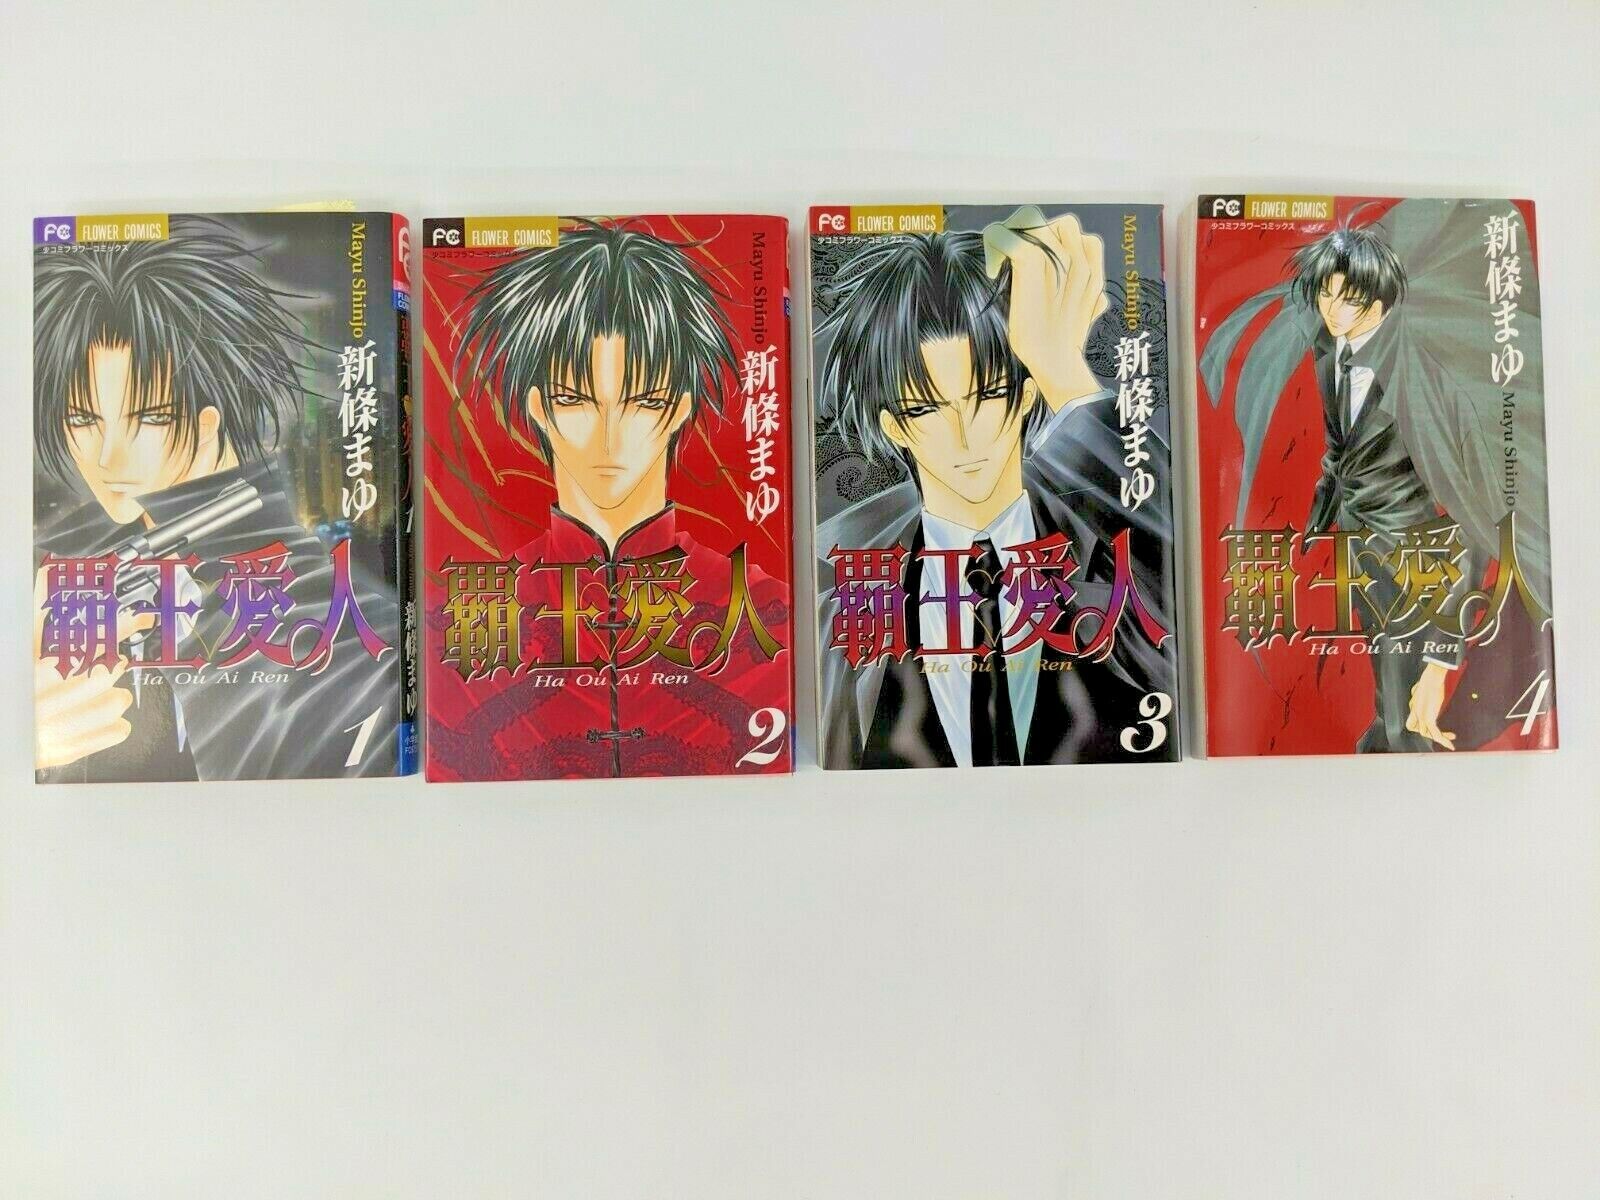 Japanese Haou Airen Manga Volumes 1-4 by Mayu Shinjo (Not in English)